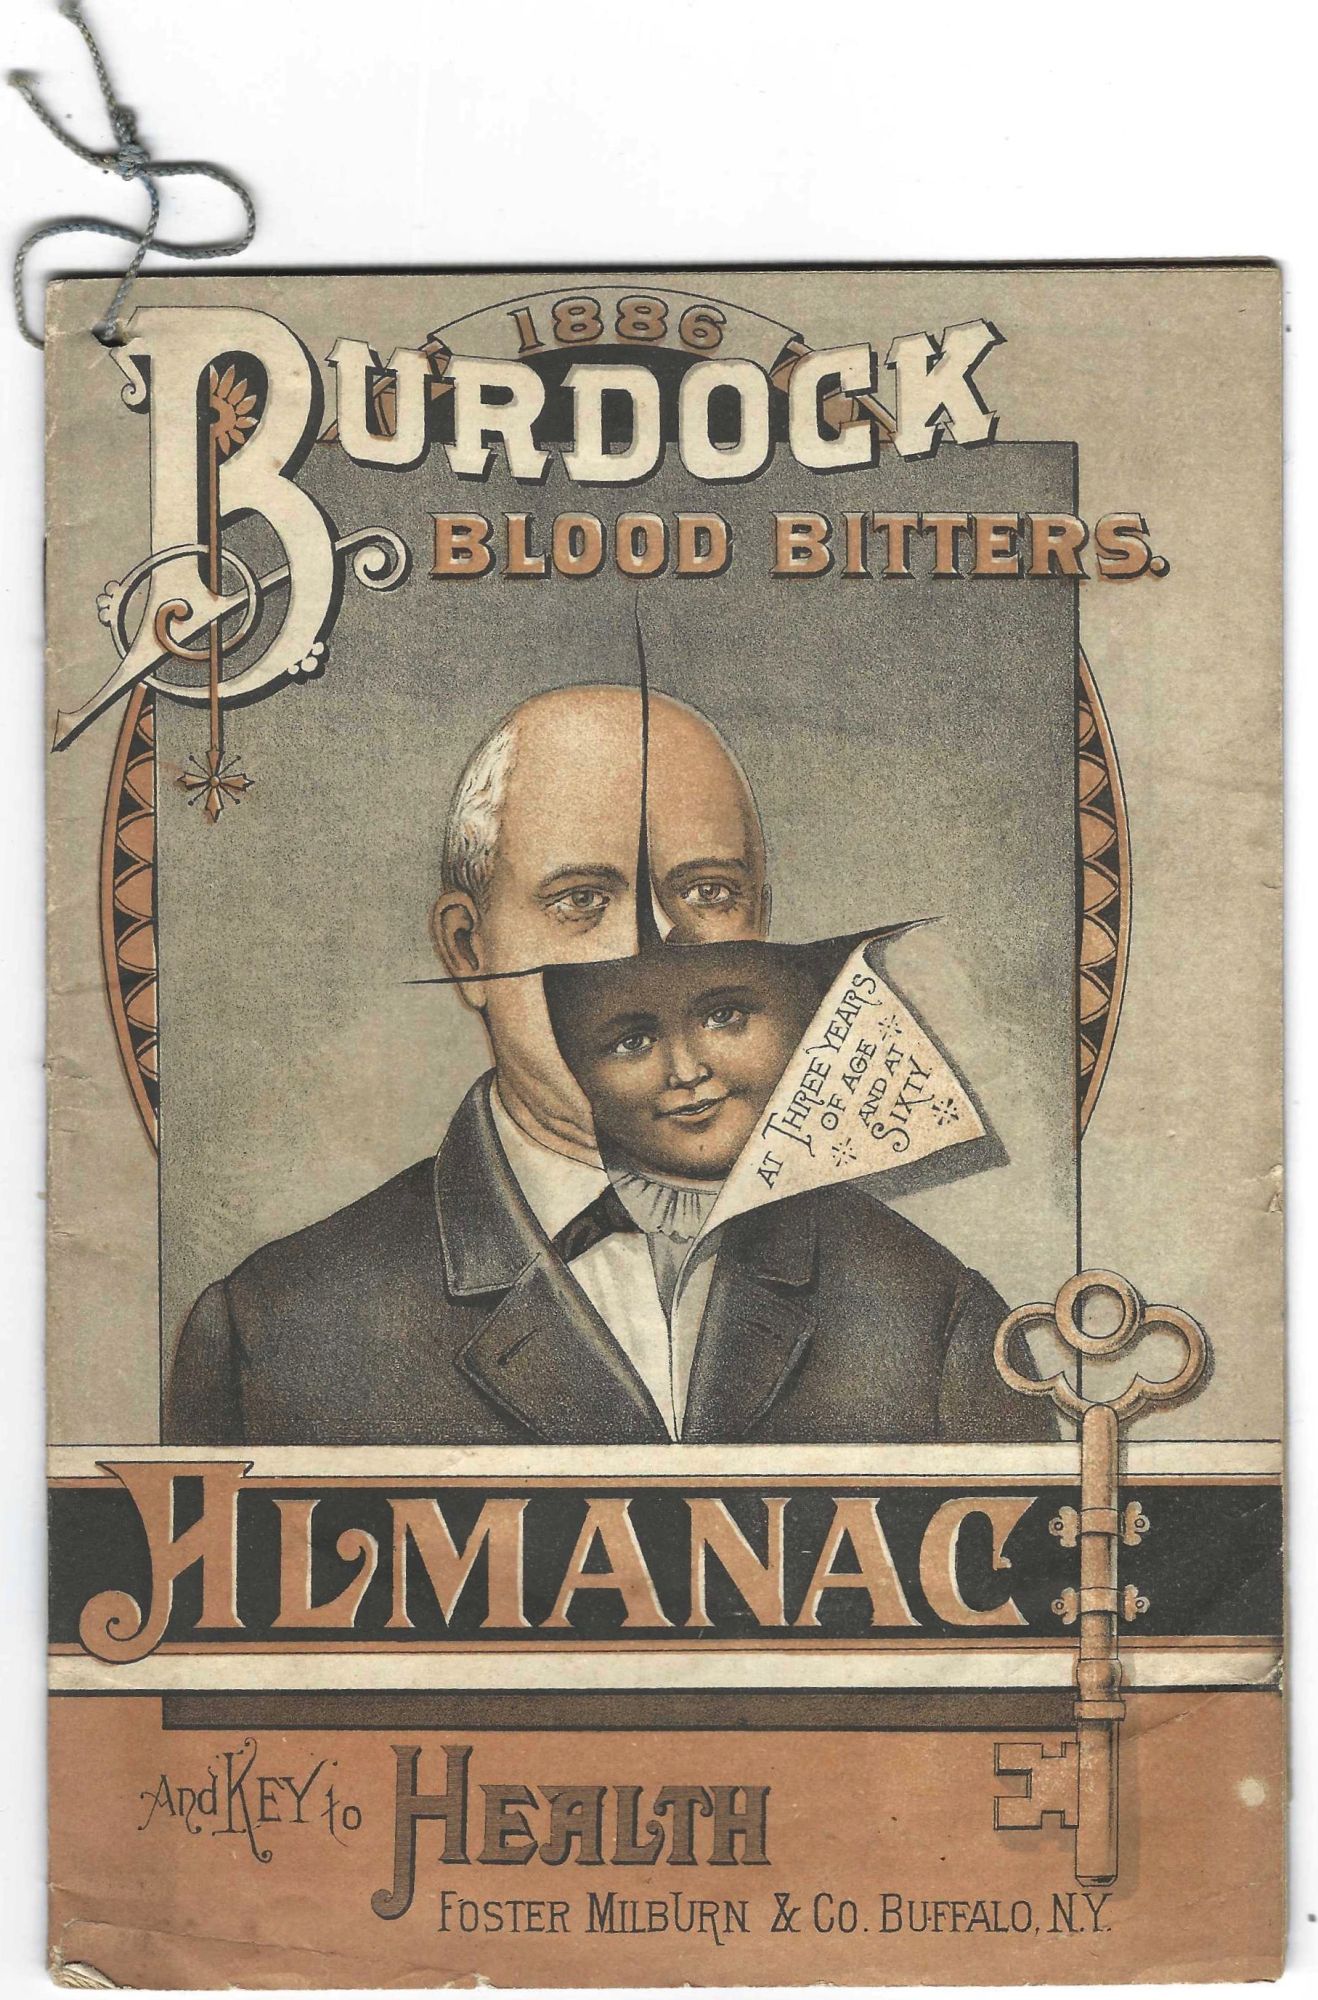 Item #8891 1886, Burdock Blood Bitters. Almanac and Key to Health. Almanac – Bitters, Foster Milburn, Co, N. Y. Buffalo.